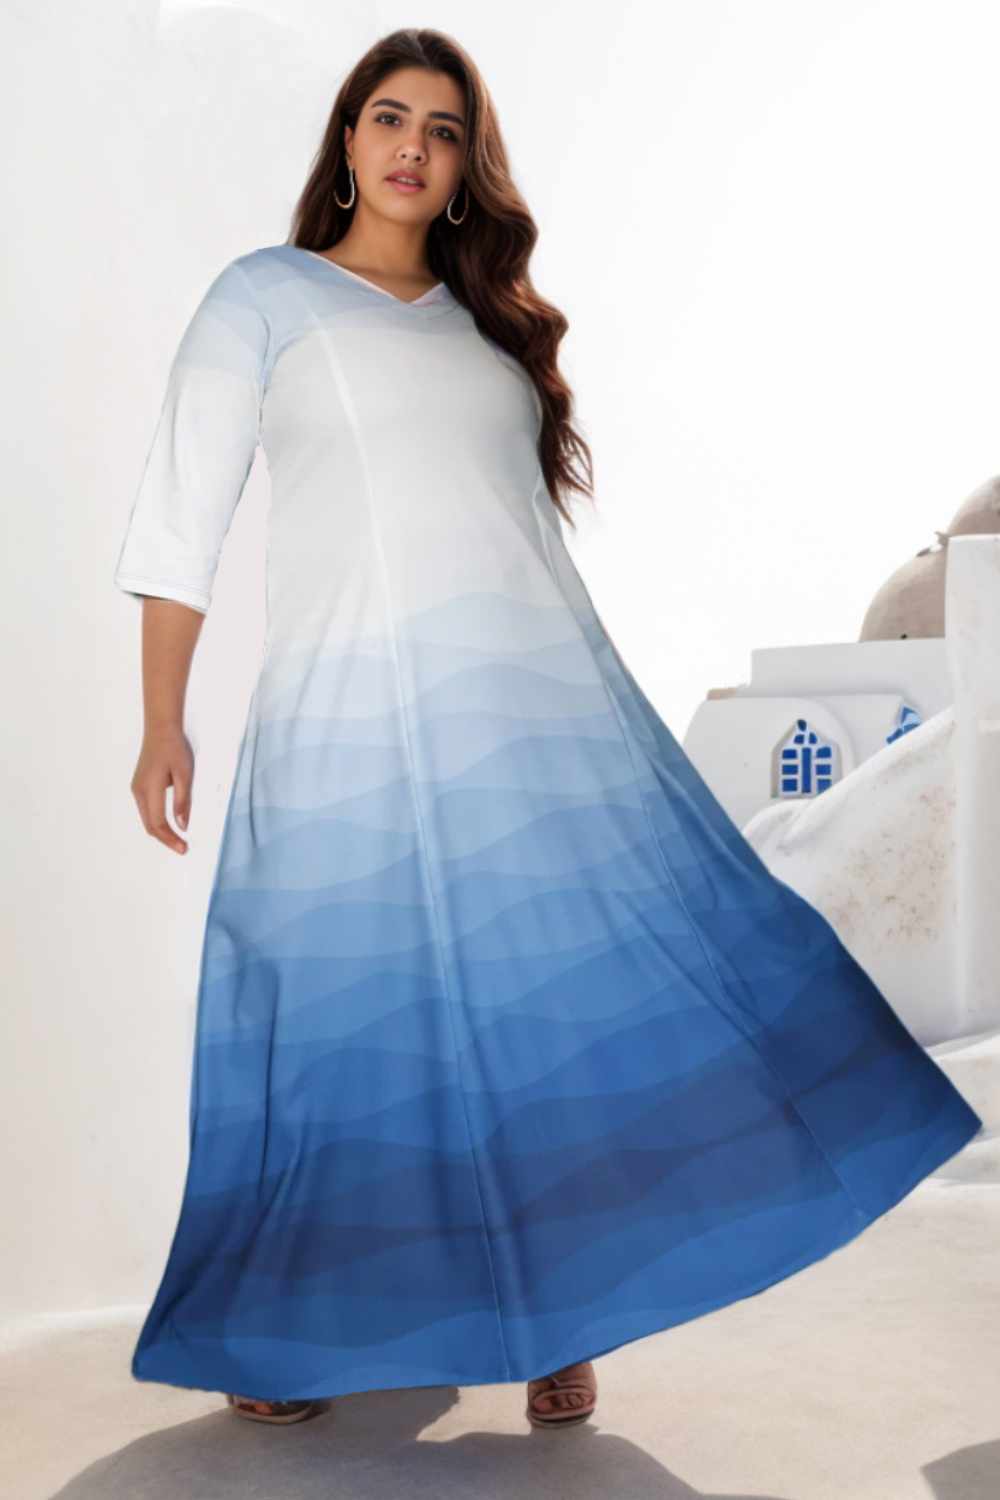 Buy Comfy White Blue Maxi Dress For Plus Size Online